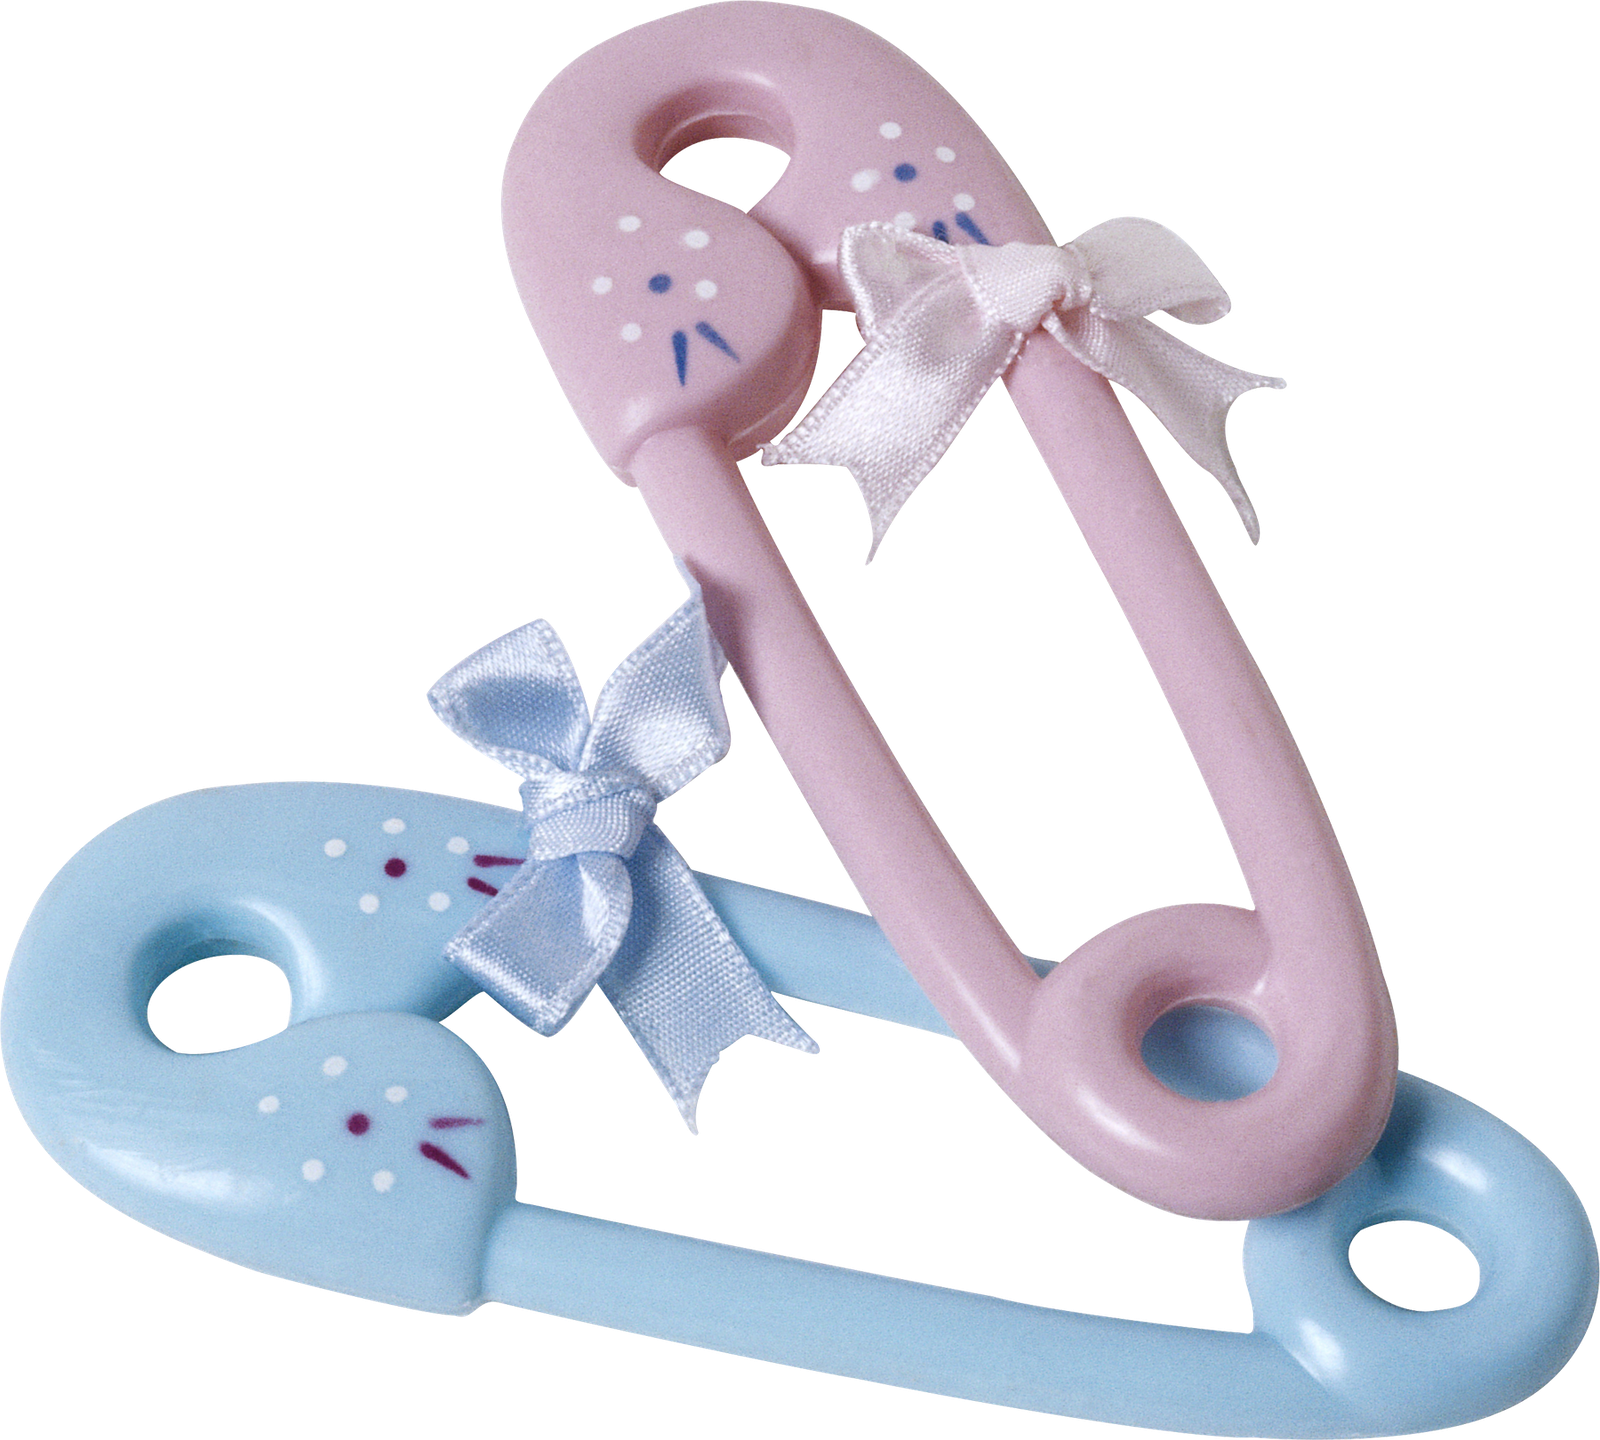 Imágenes De Accesorios Para Bebés - Baby Shower Safety Pin (1600x1440)